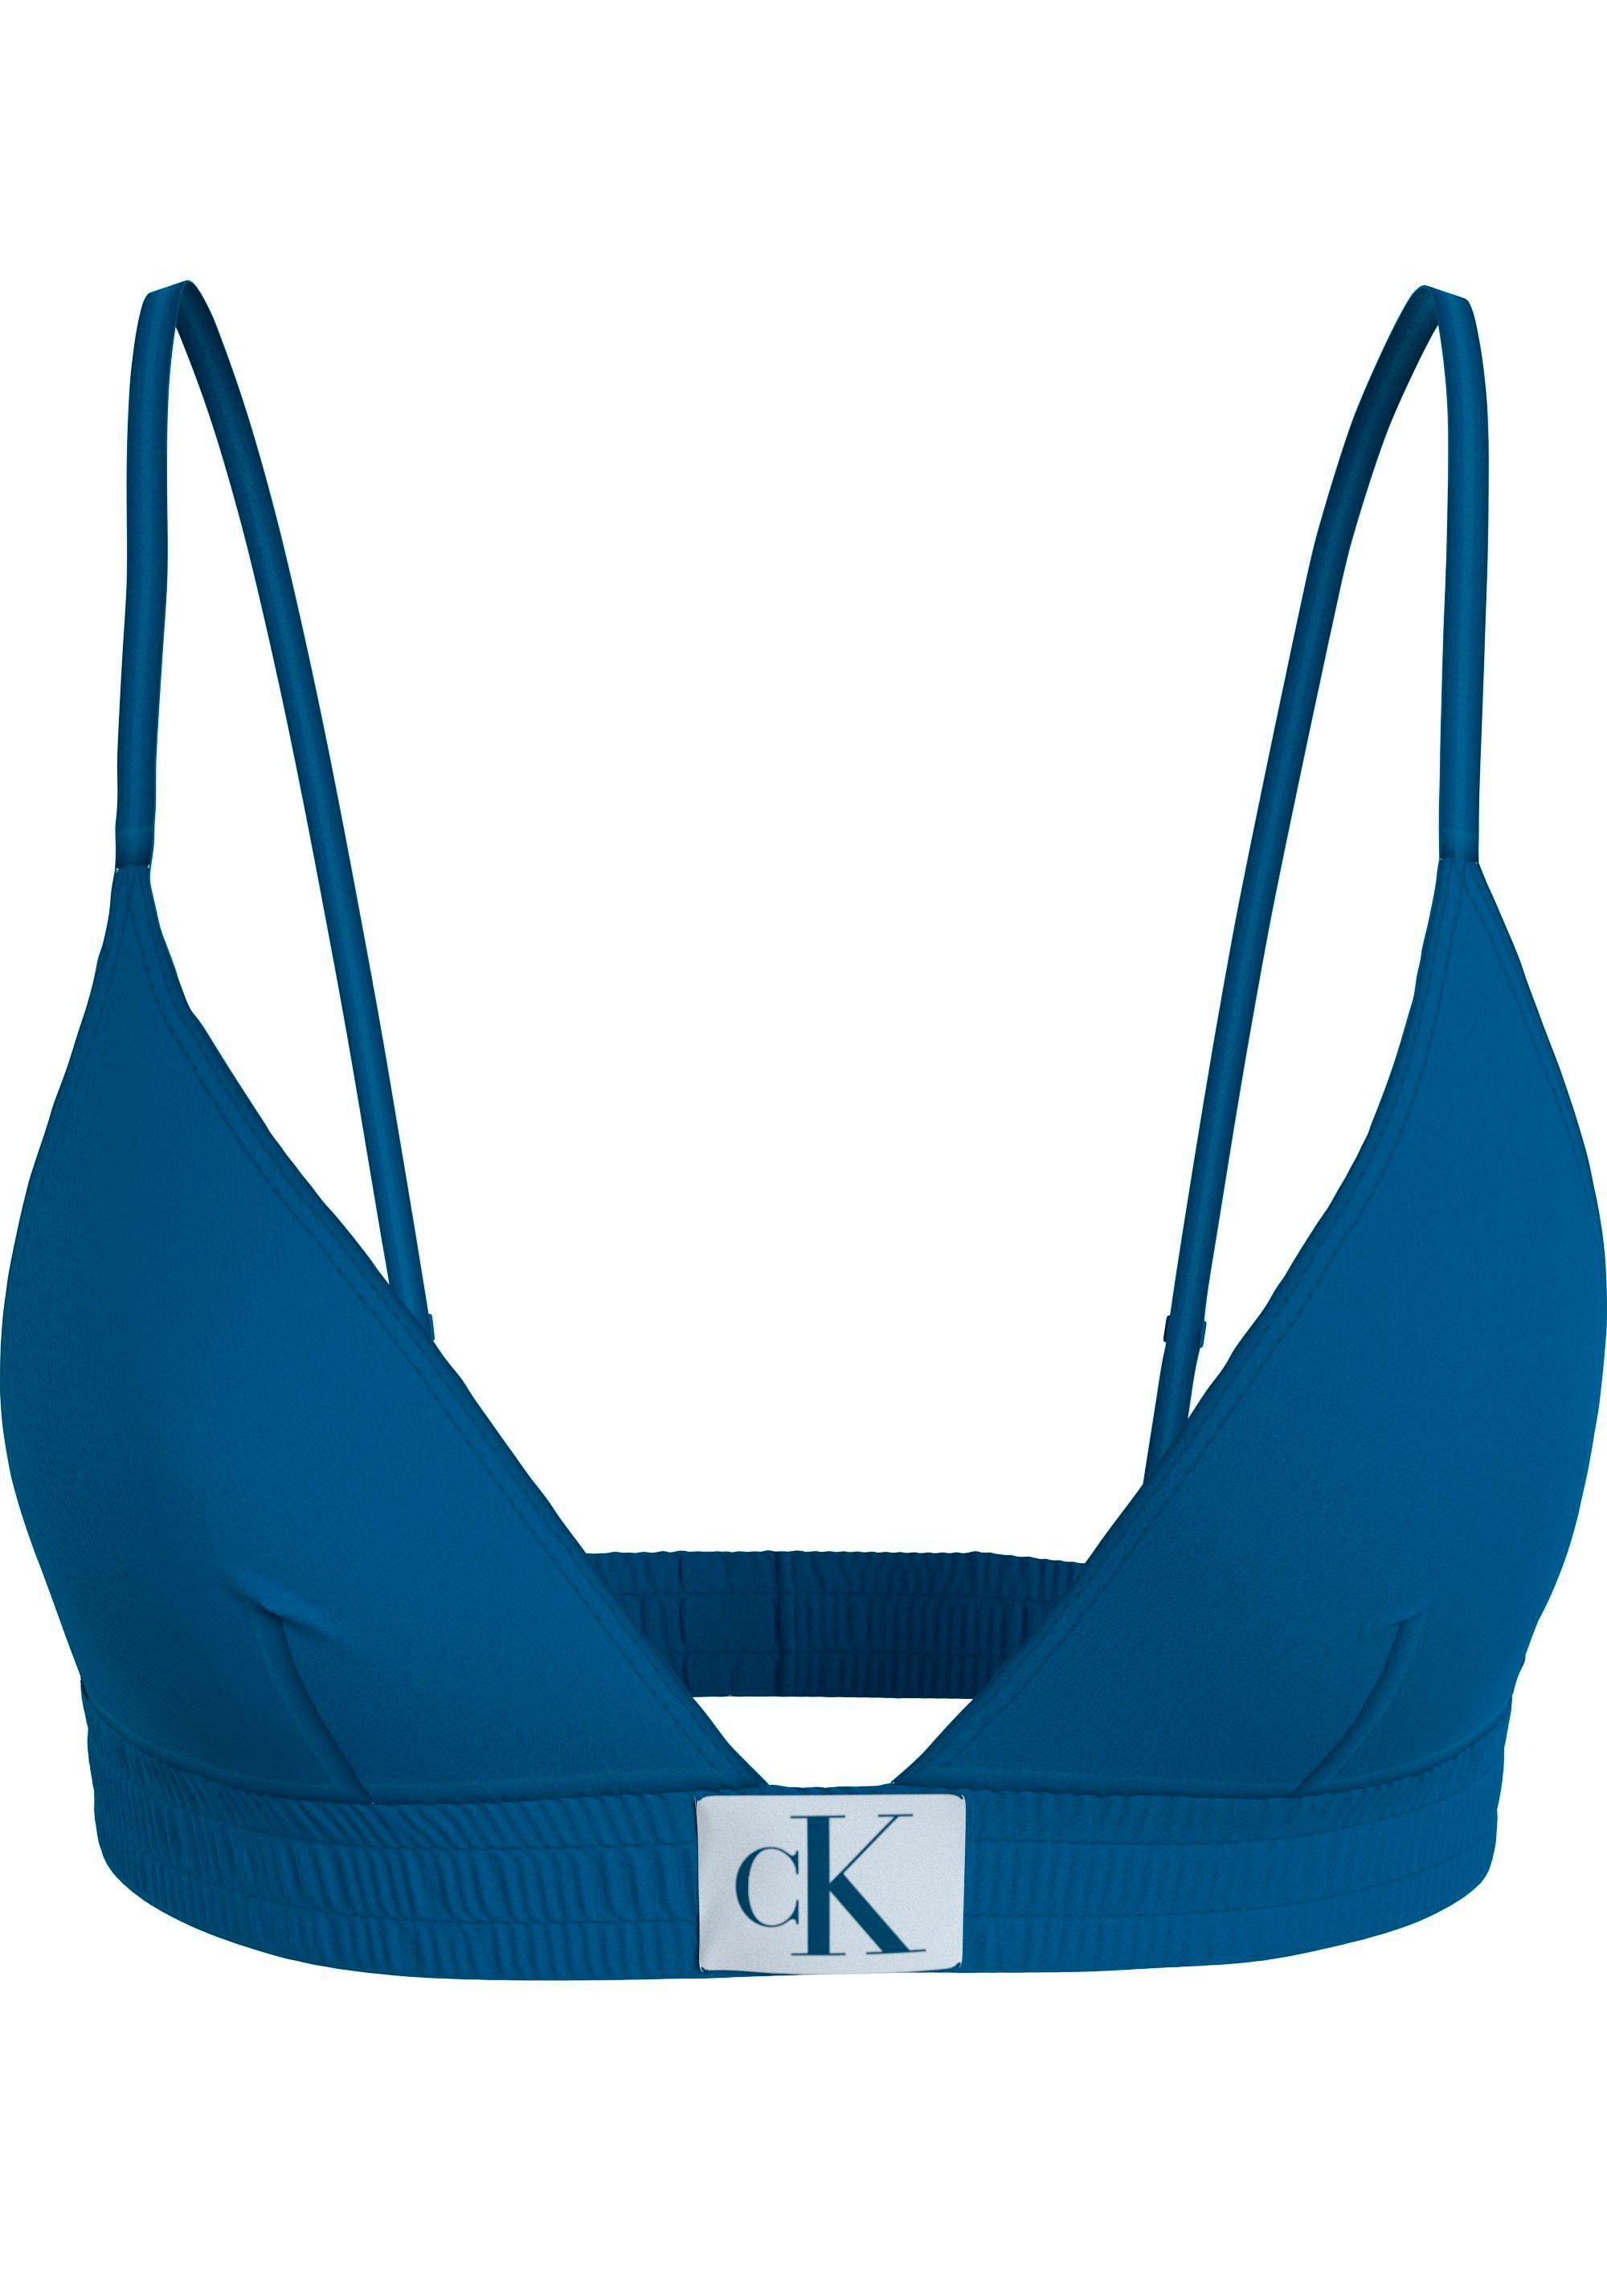 Klein mit Calvin FIXED Klein TRIANGLE-RP, Calvin Markenlabel Swimwear Triangel-Bikini-Top